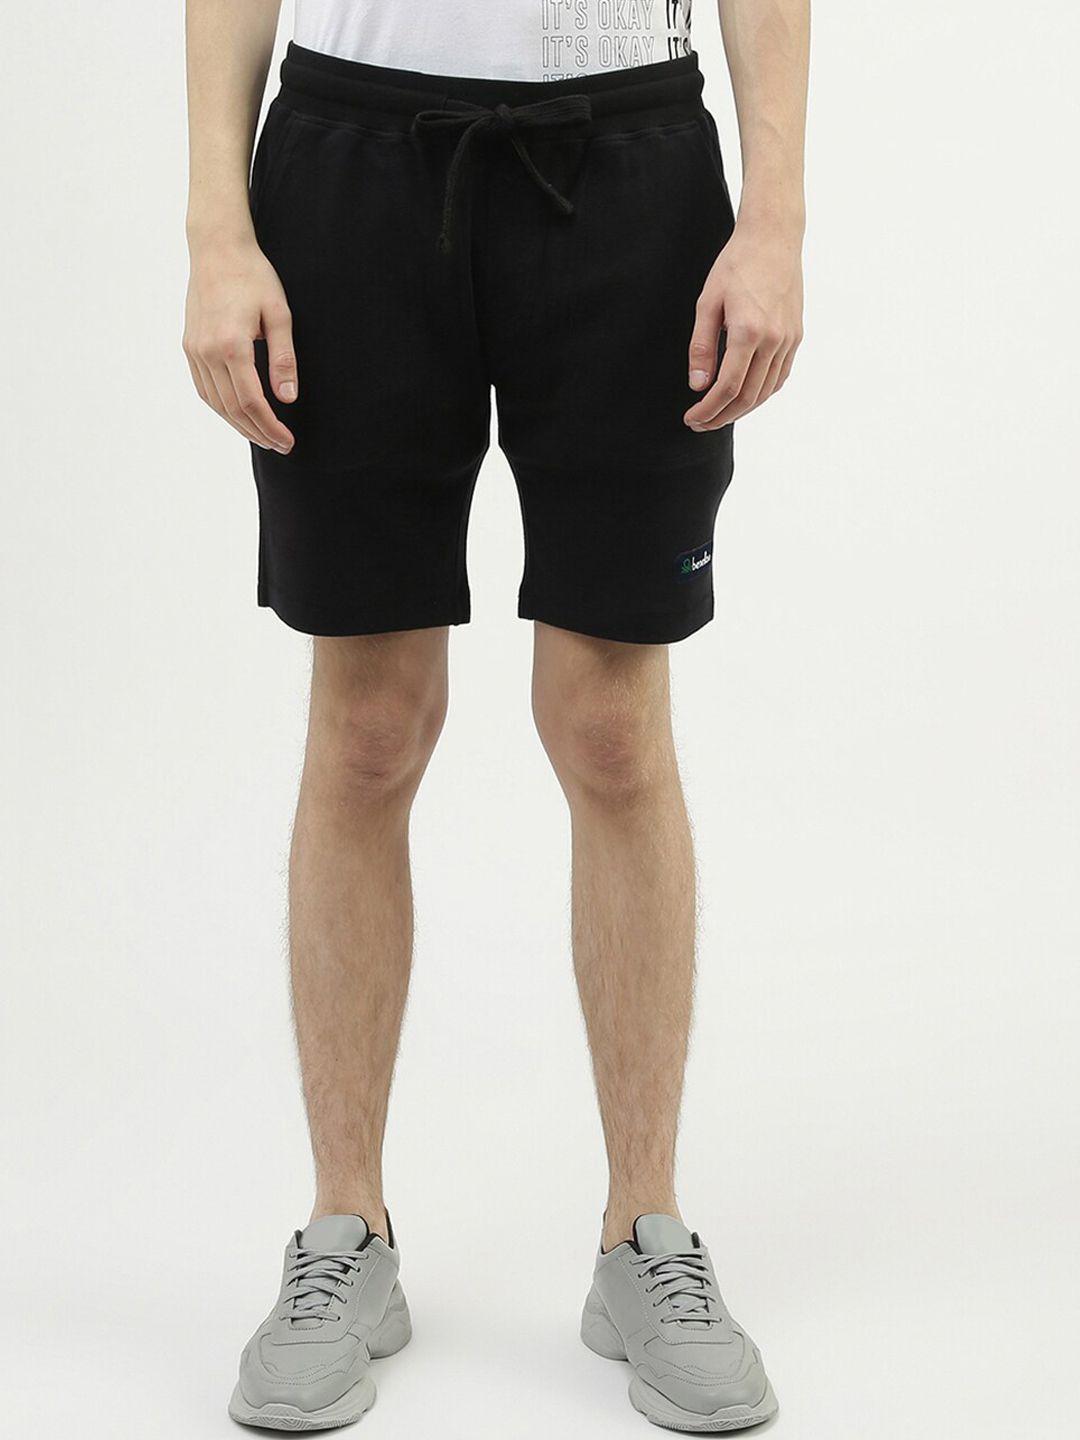 united-colors-of-benetton-men-regular-fit-cotton-shorts